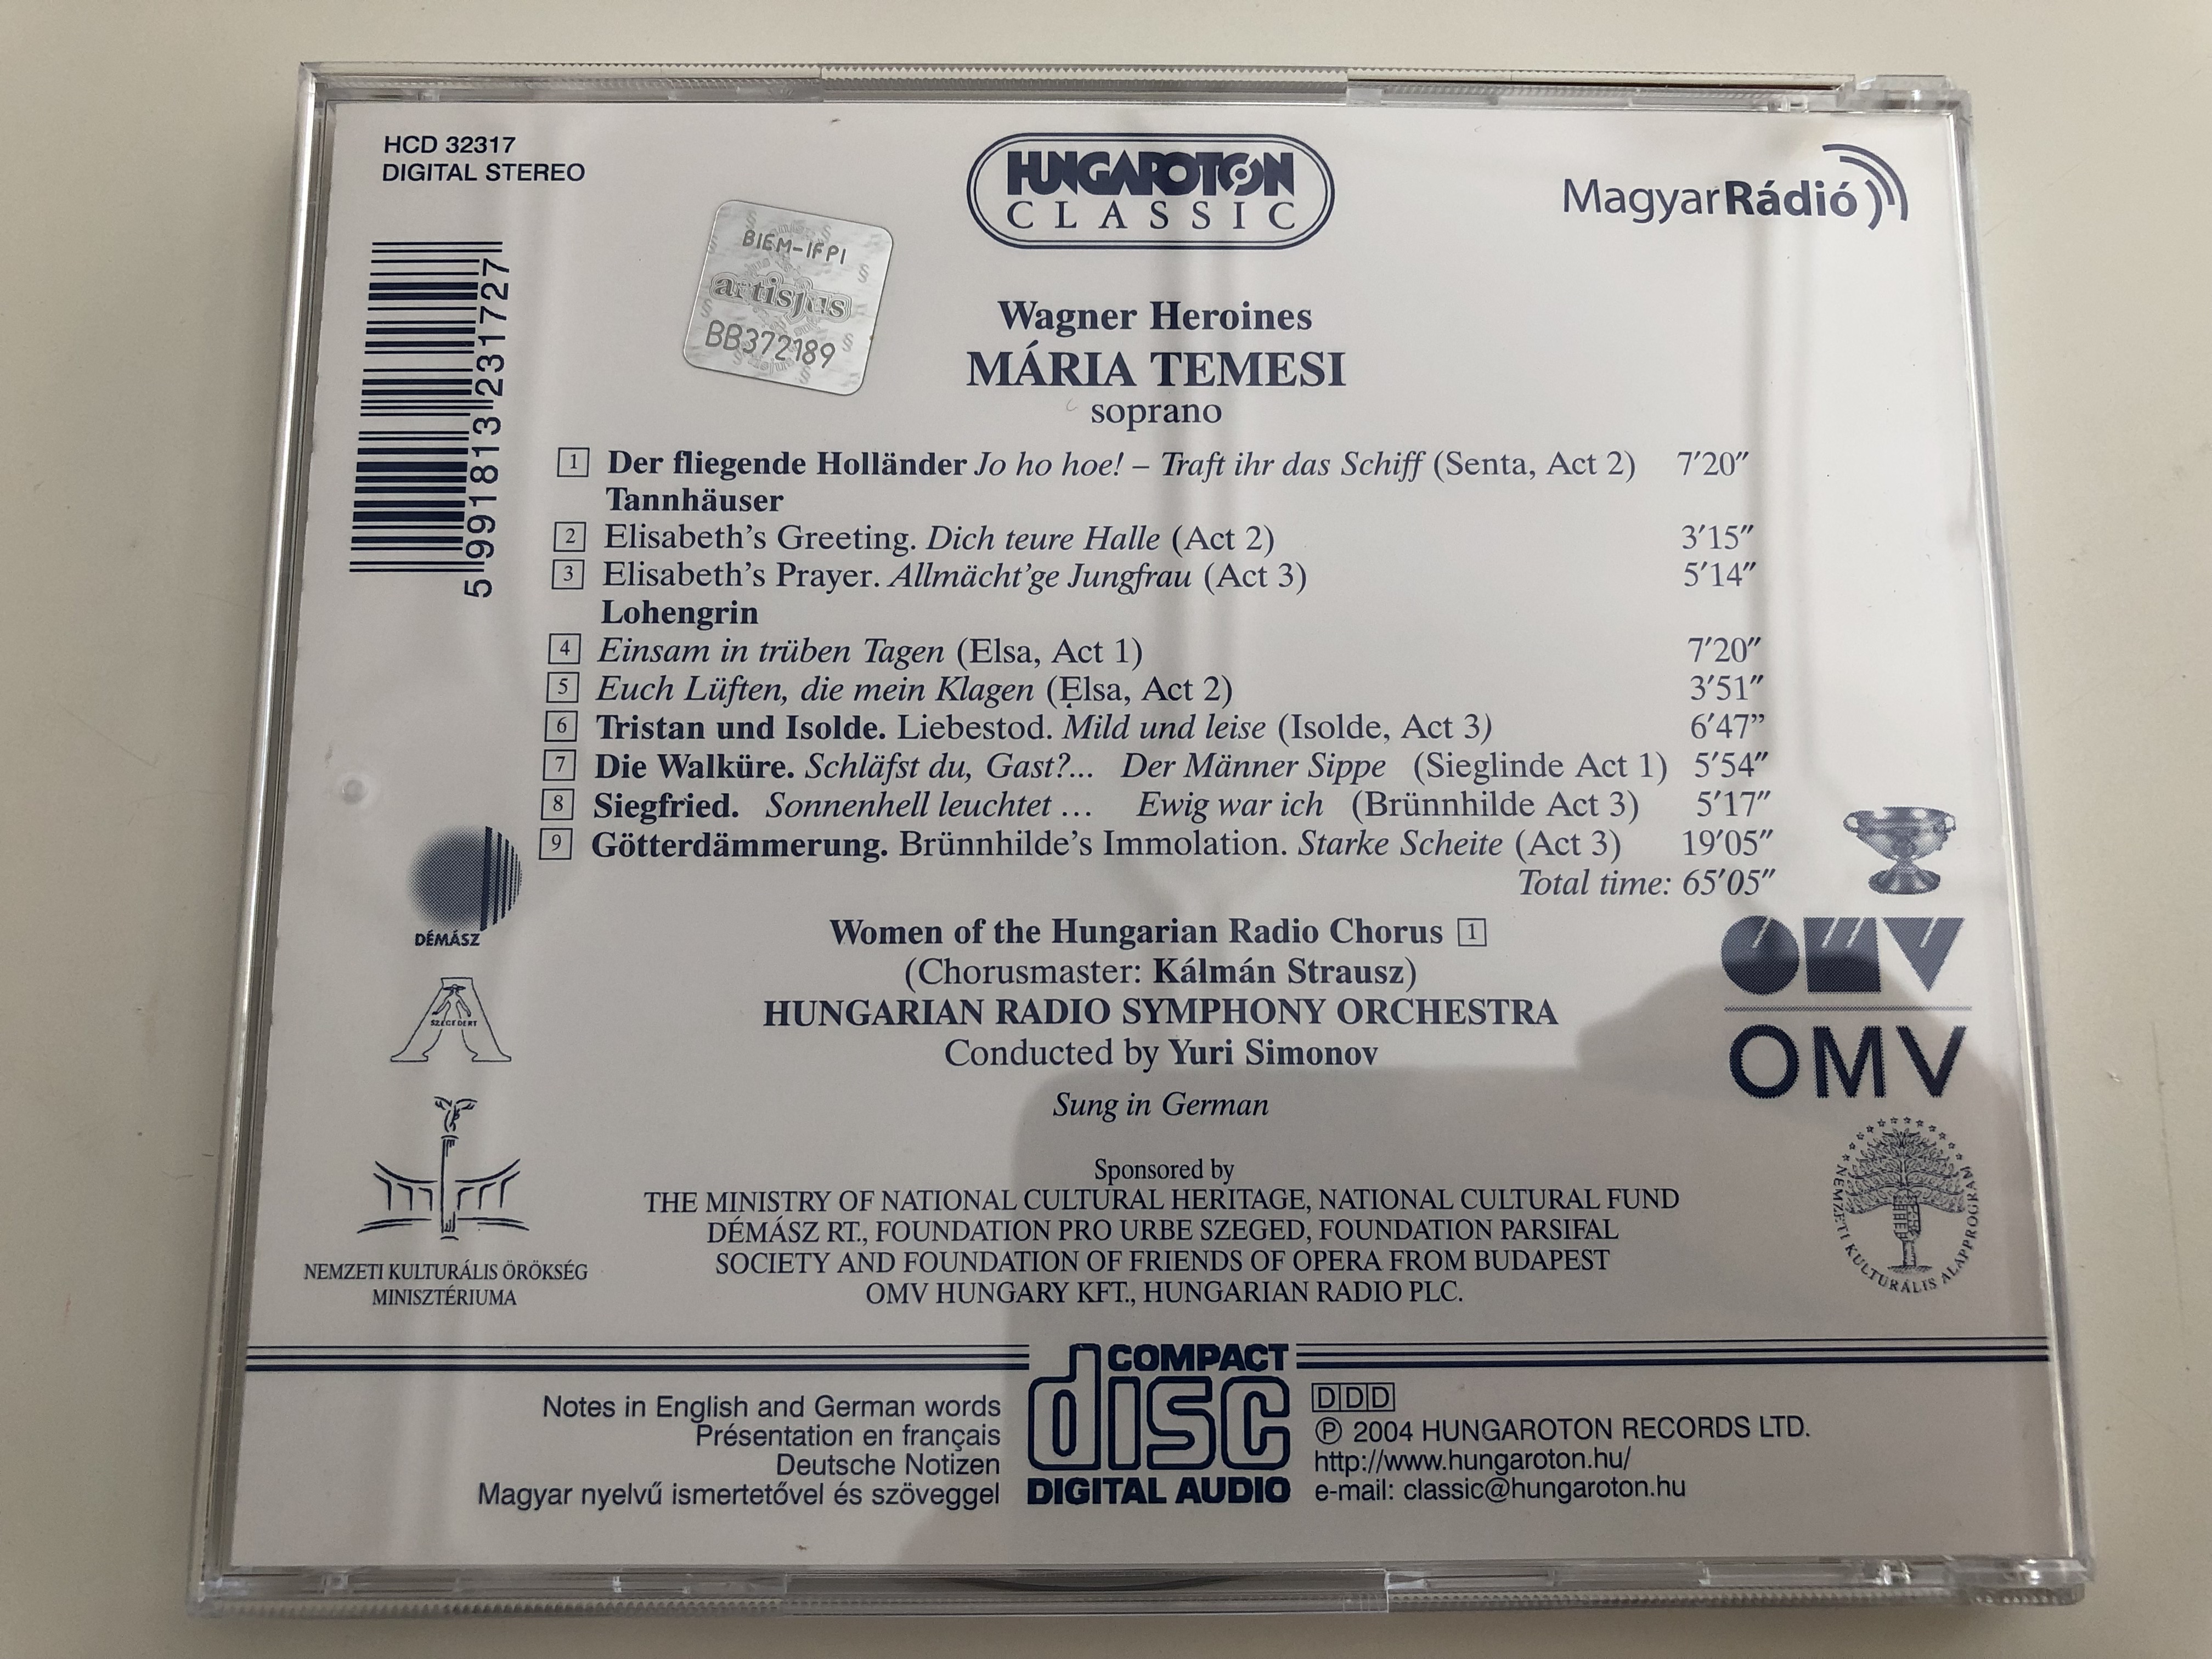 -wagner-heroines-m-ria-temesi-hungarian-radio-symphony-orchestra-conducted-by-yuri-simonov-hungaroton-classic-audio-cd-2004-hcd-32317-10-.jpg